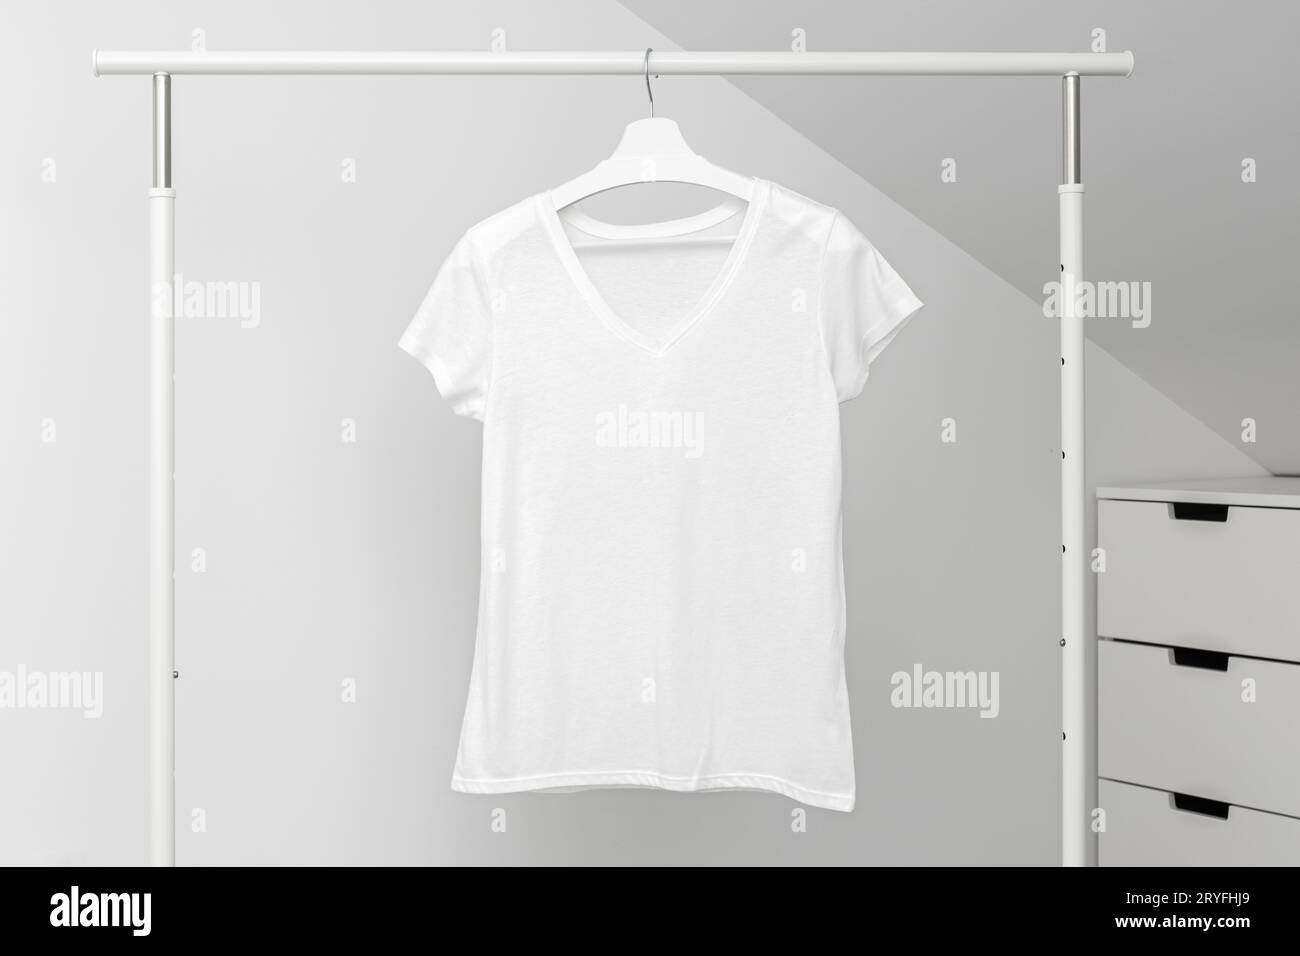 https://c8.alamy.com/comp/2RYFHJ9/group-of-assorted-t-shirts-hanging-on-white-hangers-clothing-rack-2RYFHJ9.jpg